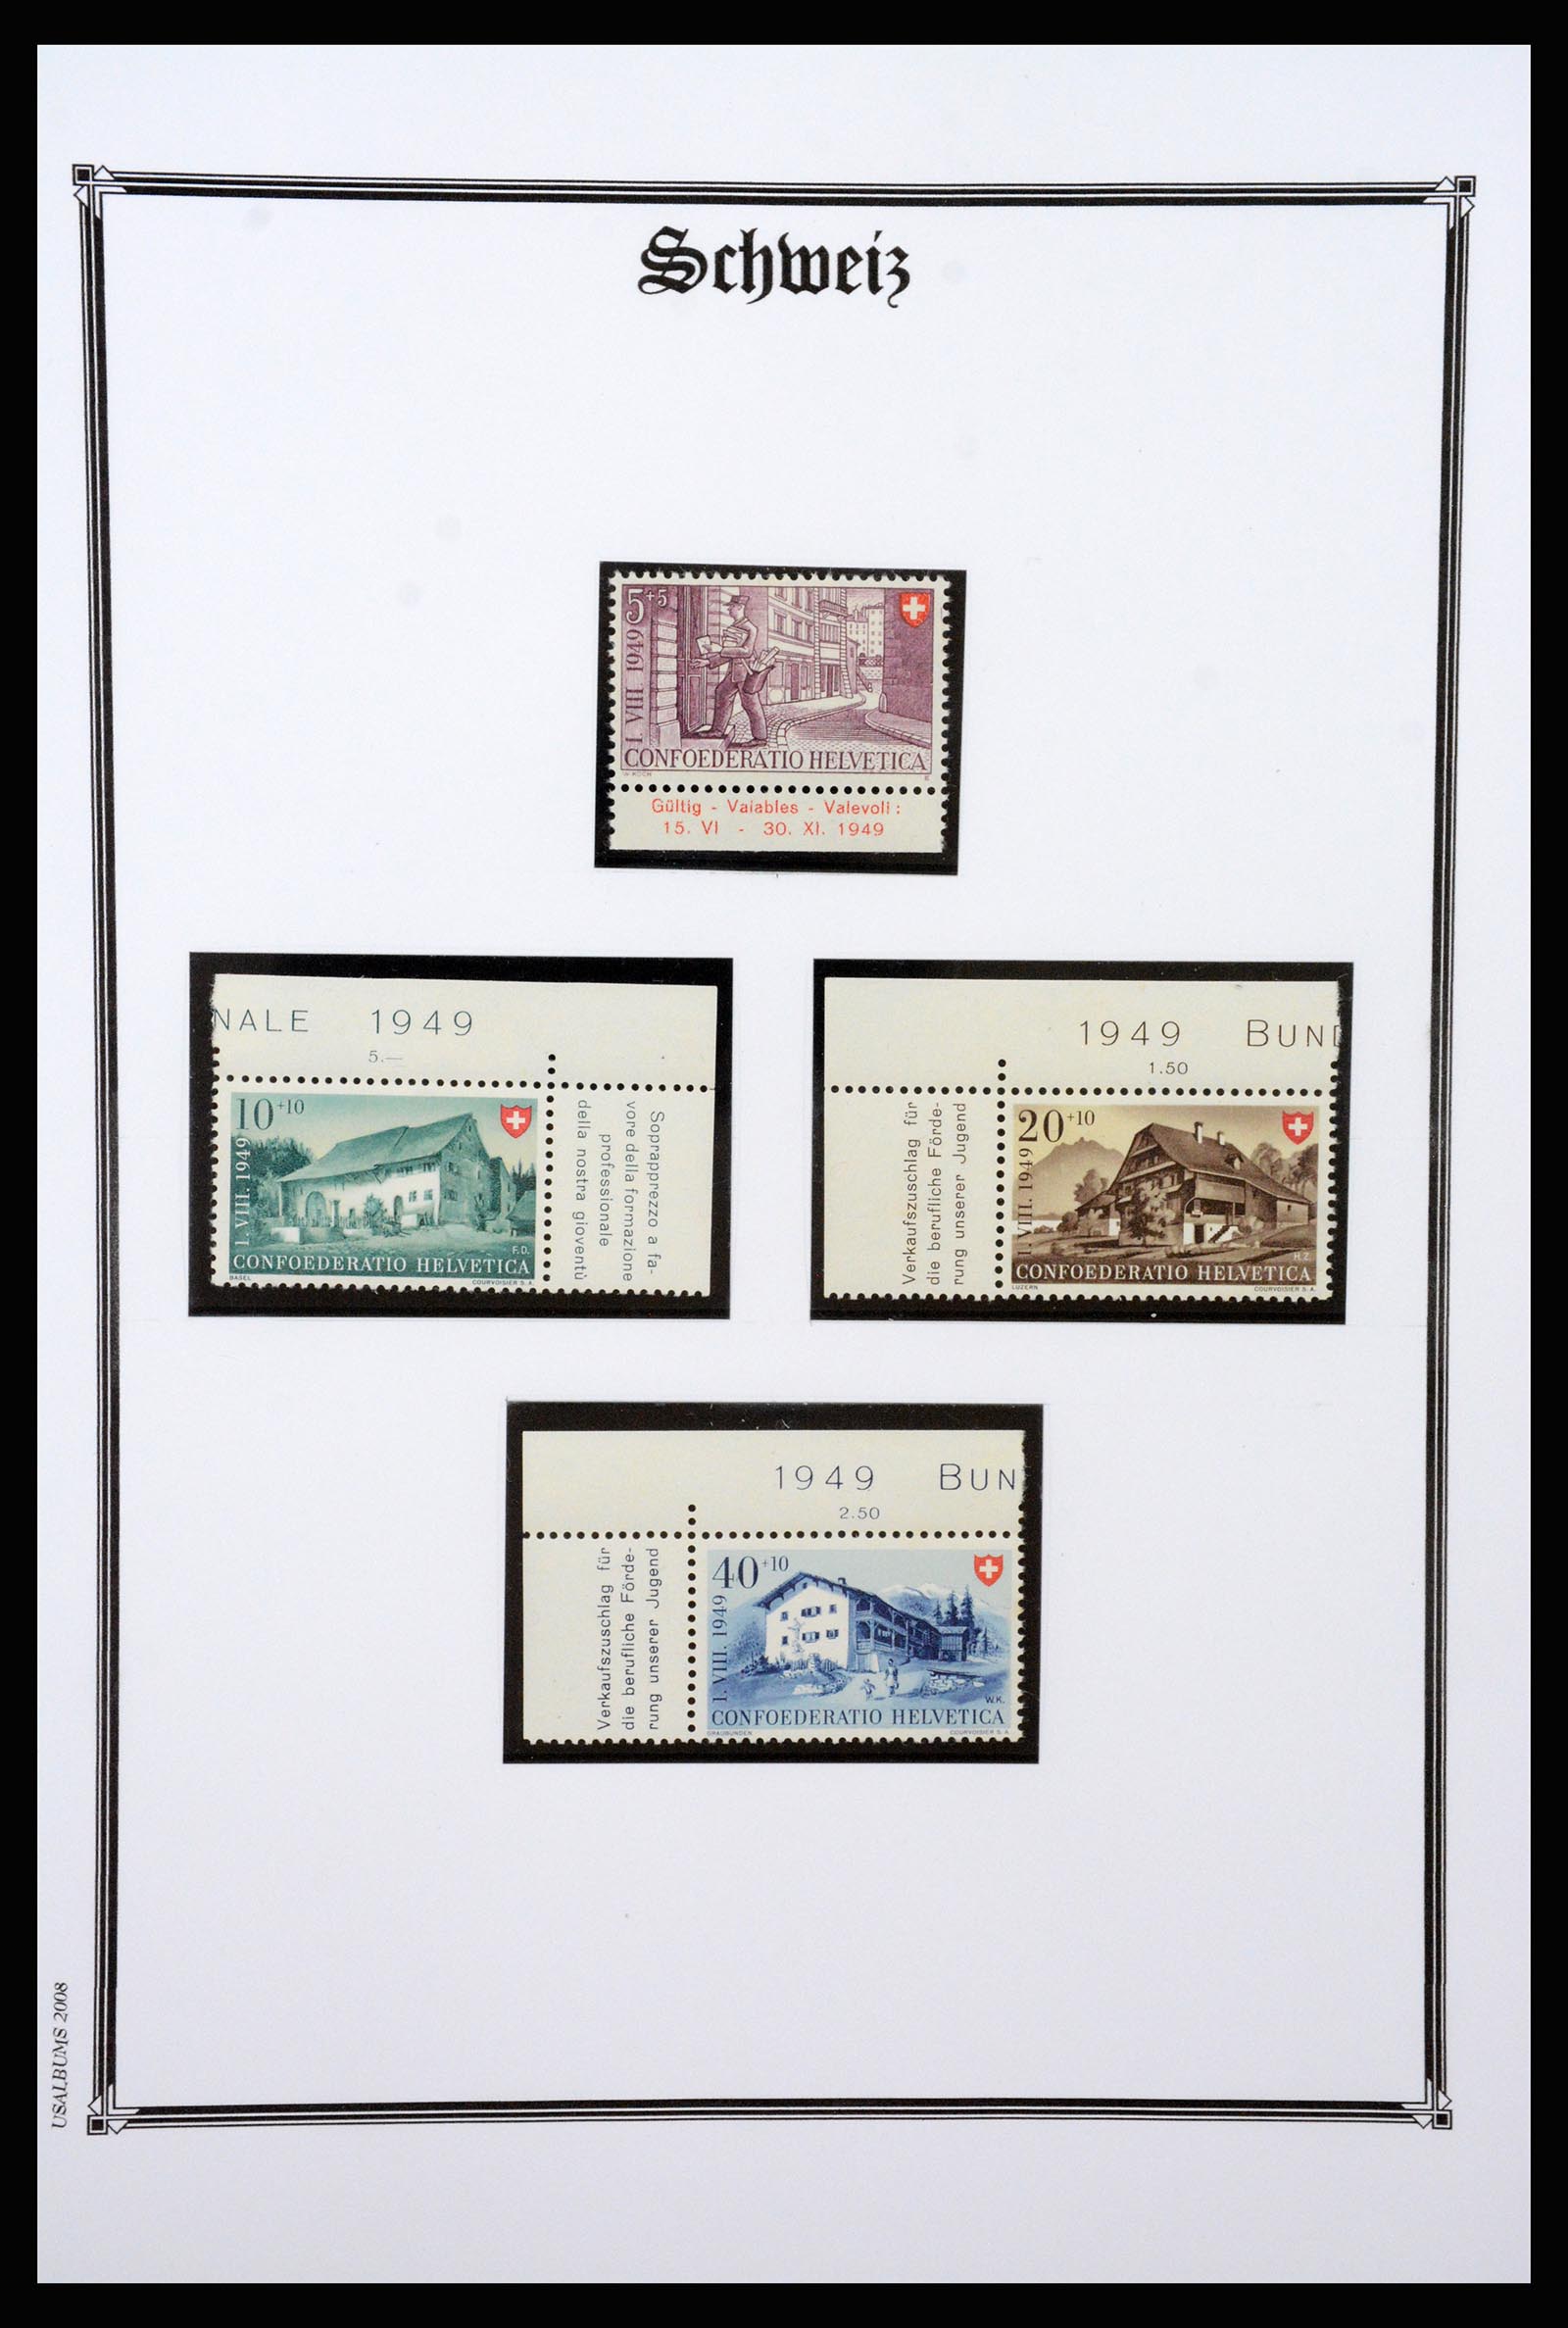 37159 093 - Stamp collection 37159 Switzerland 1862-2000.